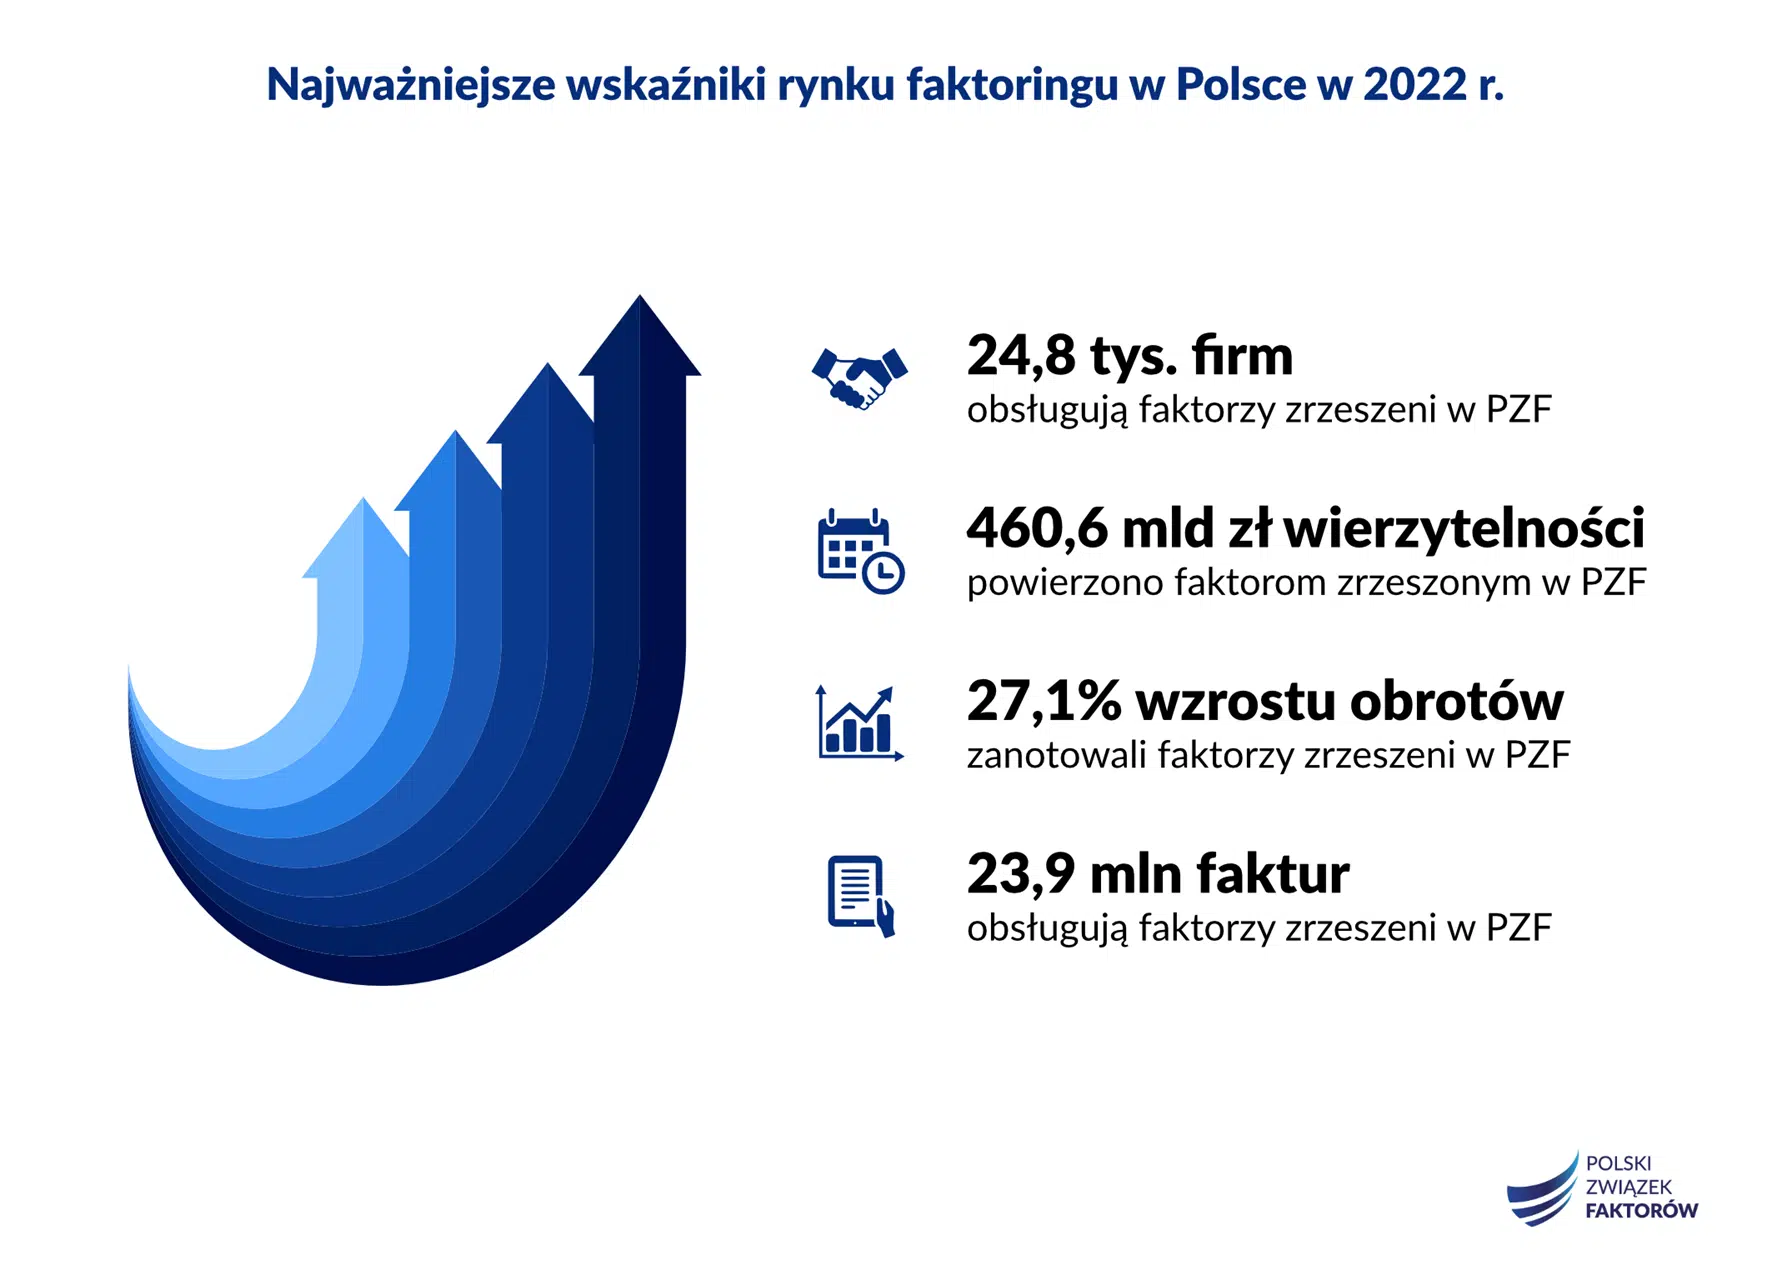 faktorig w polsce 2022 a